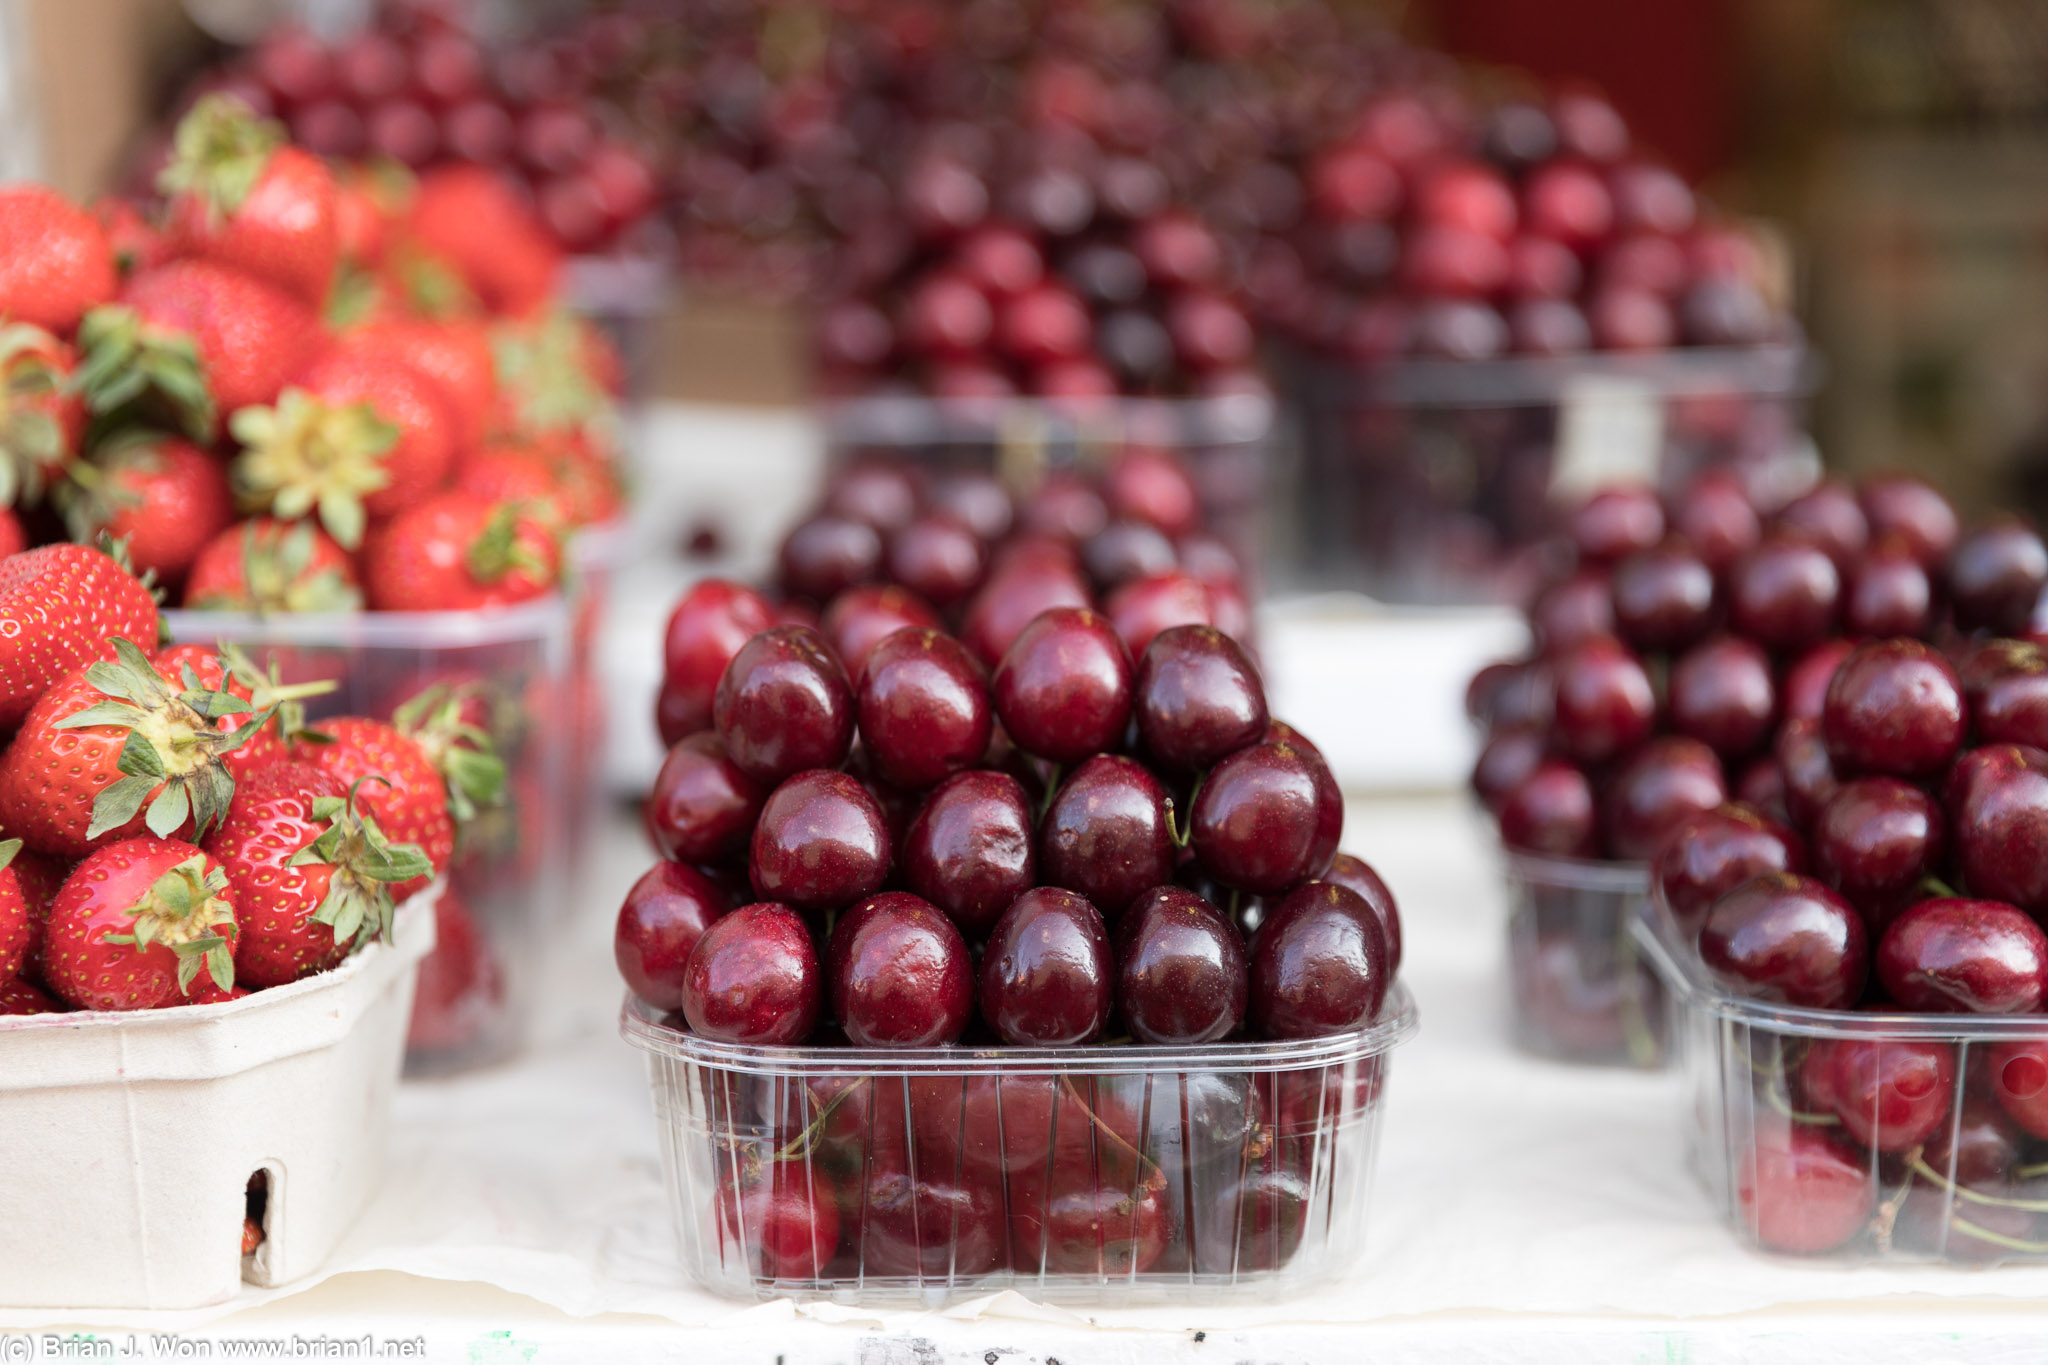 Cherries at a supermarket.